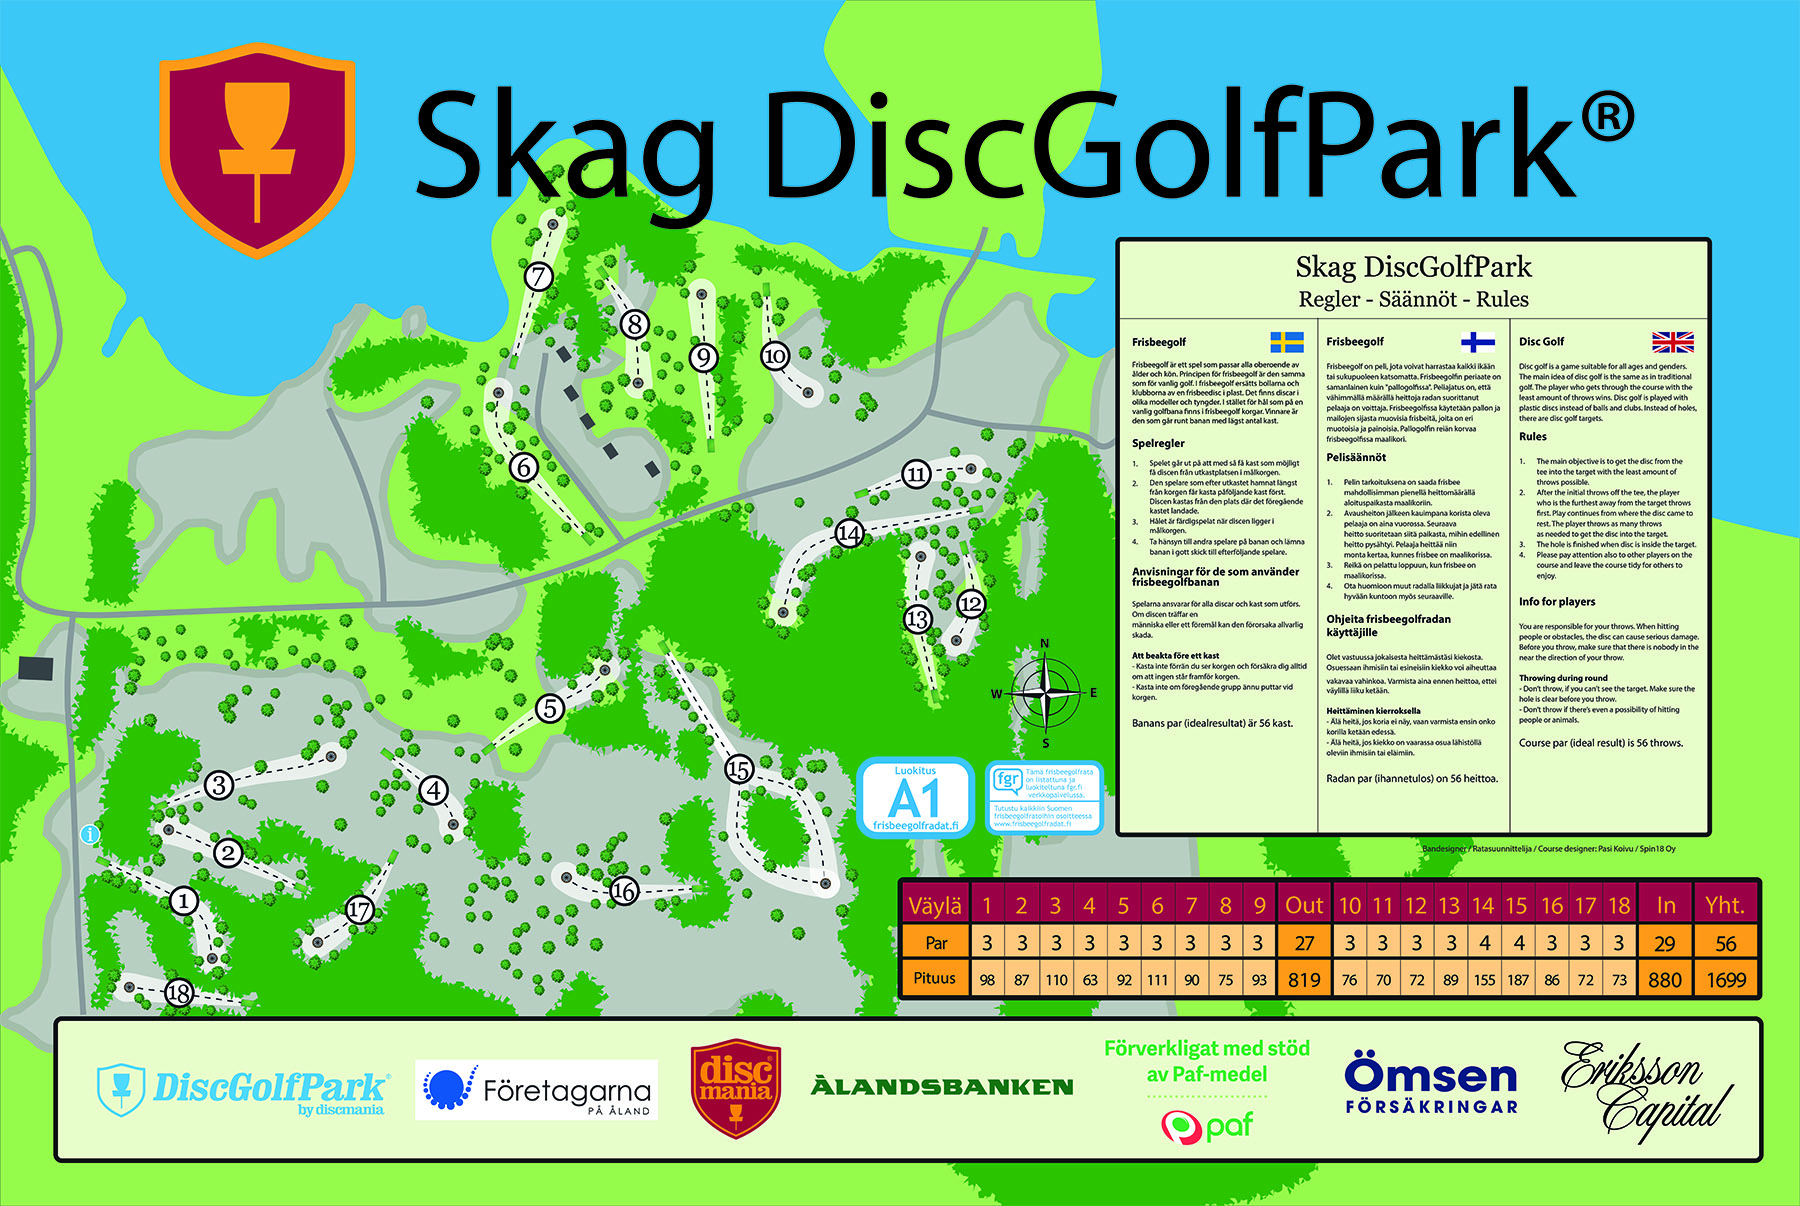 Skag DiscGolfPark - DiscGolfPark